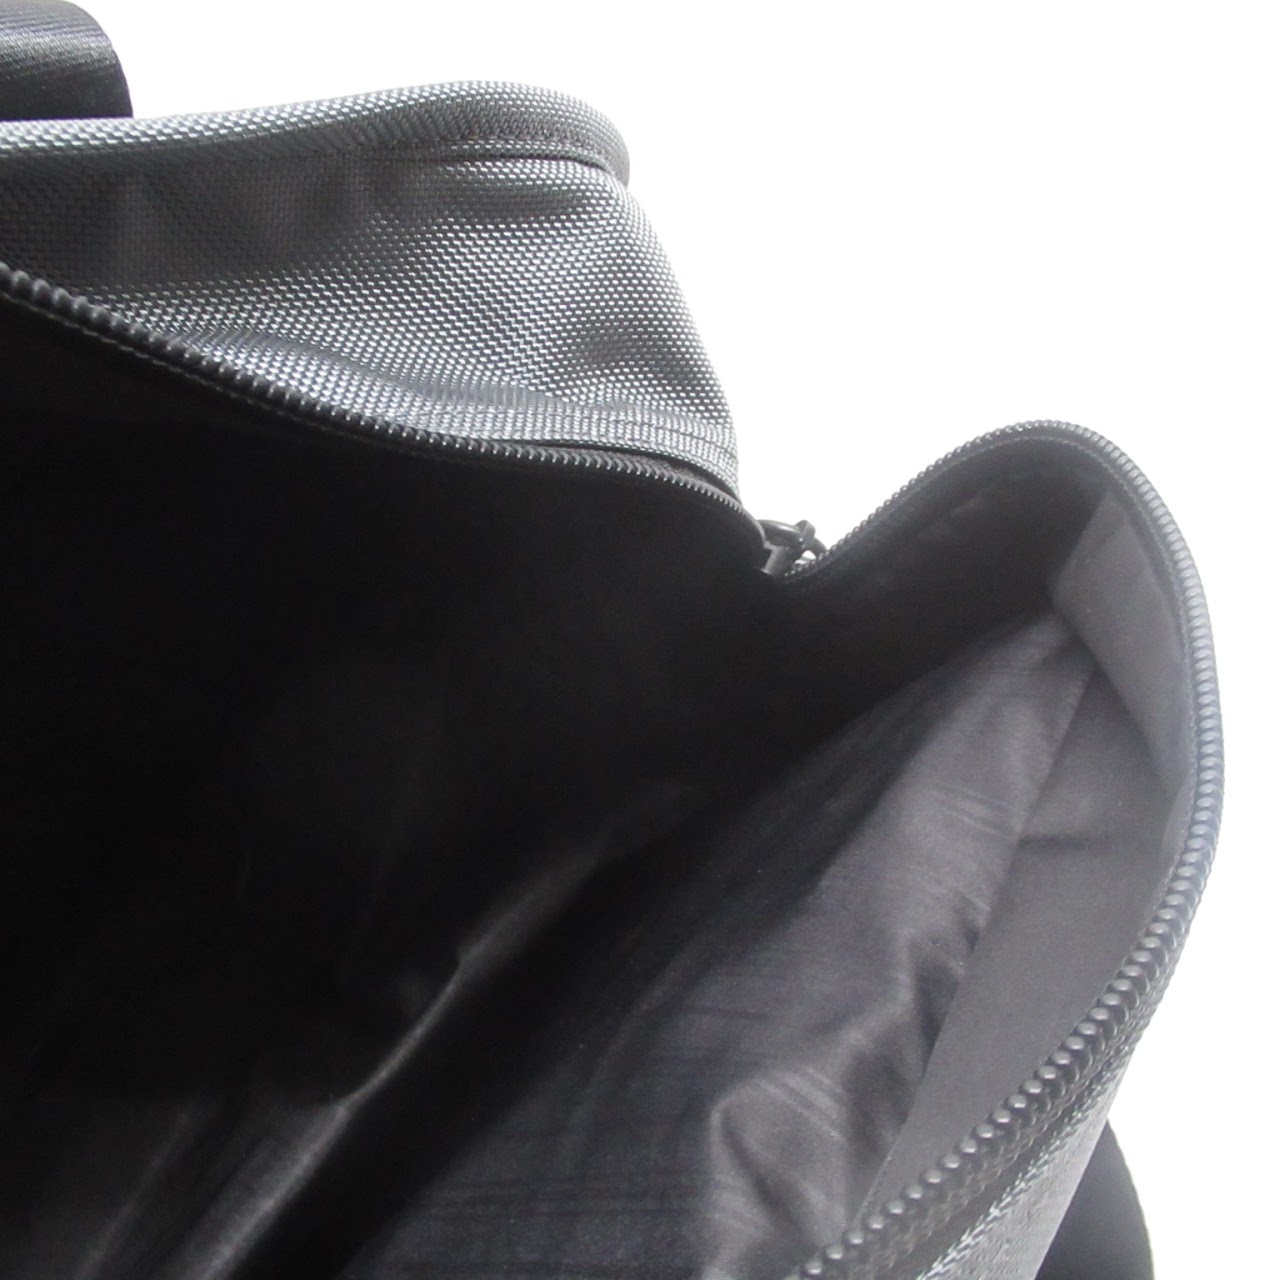 Tumi Ballistic Nylon Duffel Bag